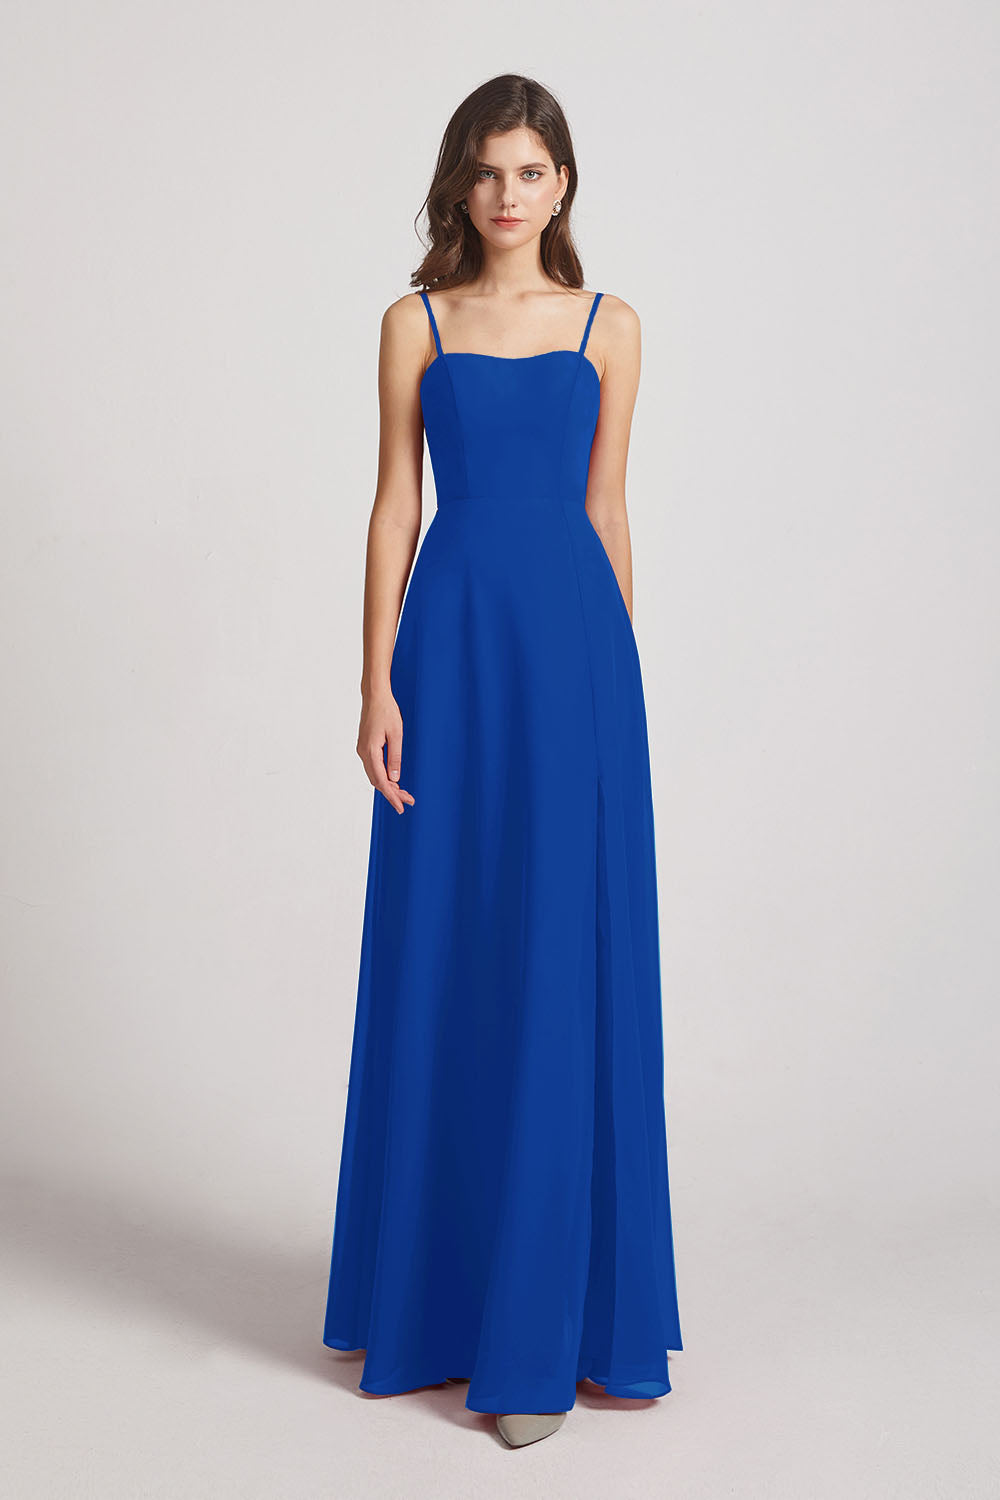 Alfa Bridal Royal Blue Spaghetti Straps Long Chiffon Bridesmaid Dresses with Side Slit (AF0112)